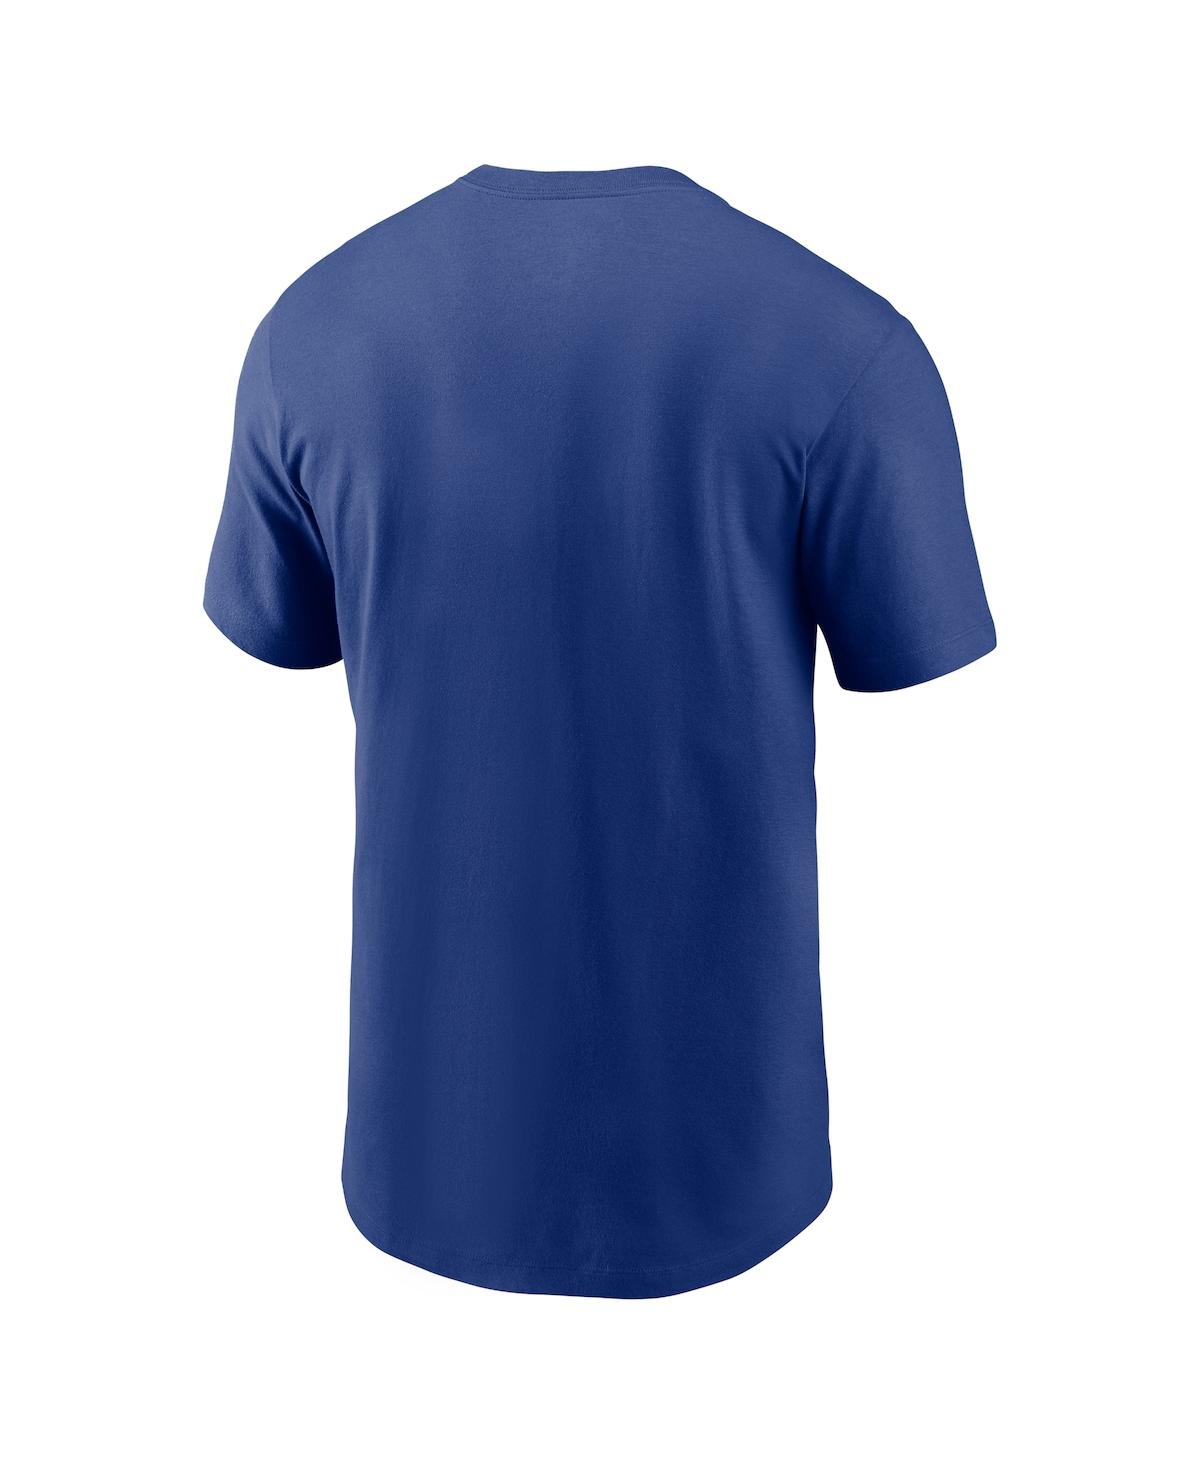 Shop Nike Men's  Royal New York Giants Primary Logo T-shirt